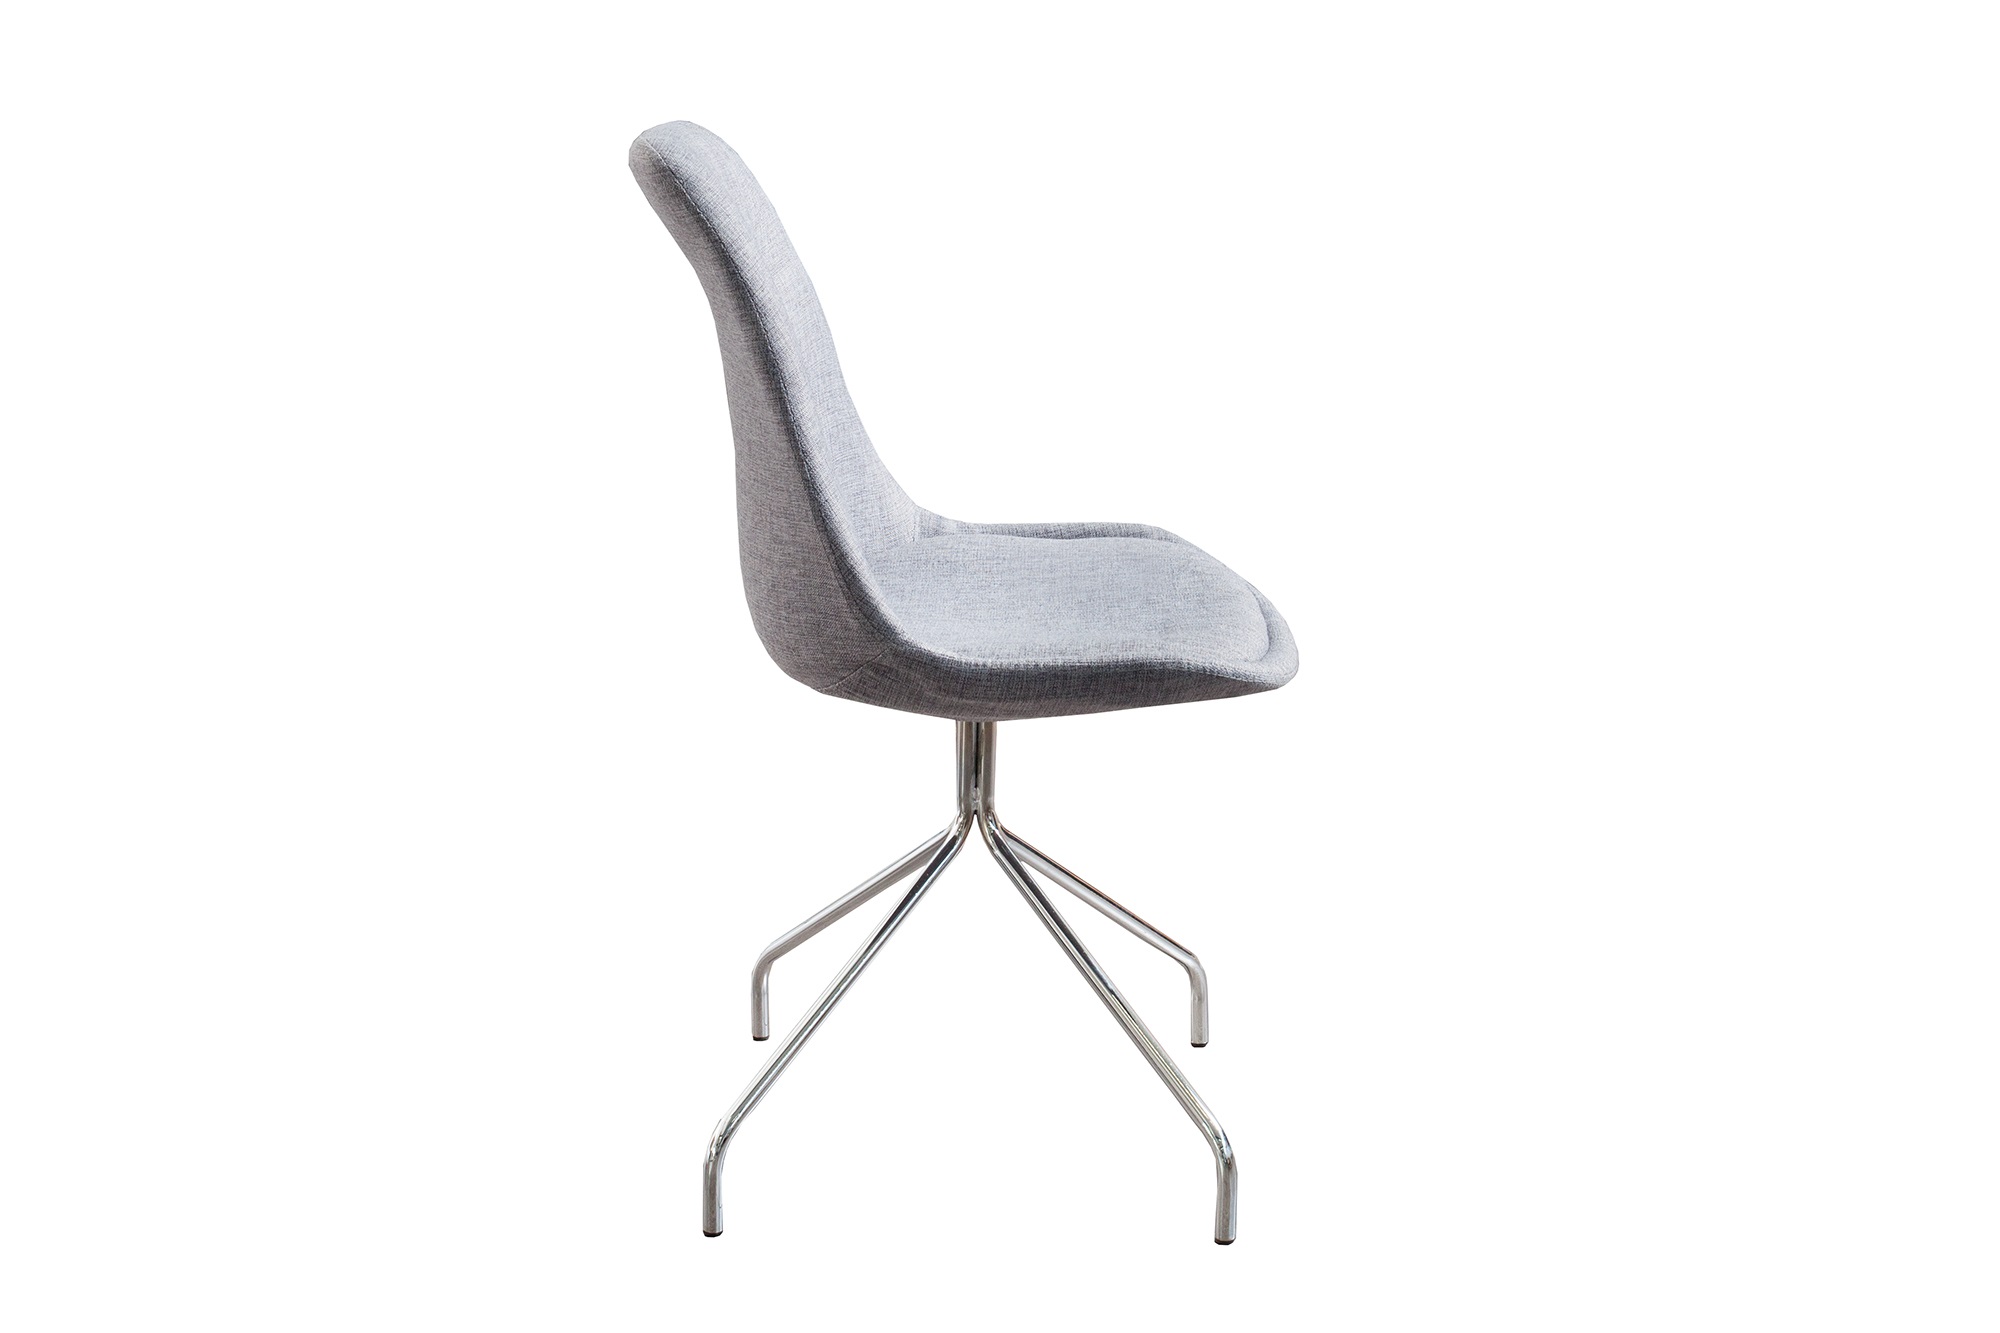 moderne stoel grijs